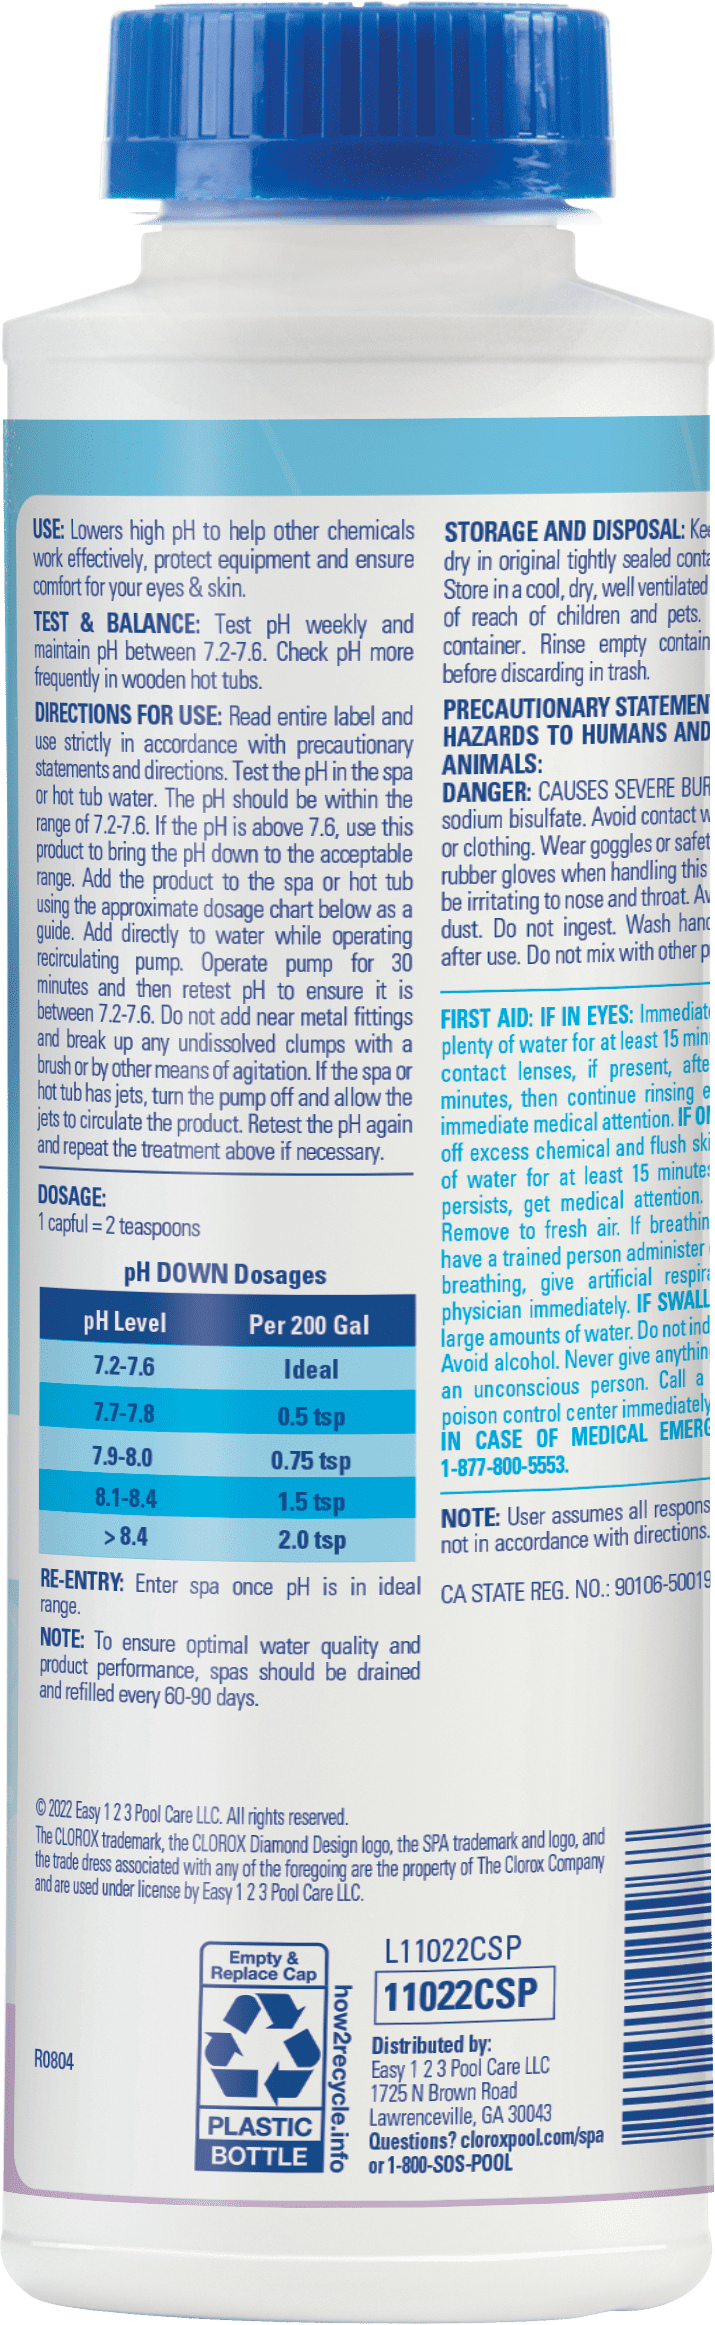 Clorox Spa pH Decreaser for Hot Tubs